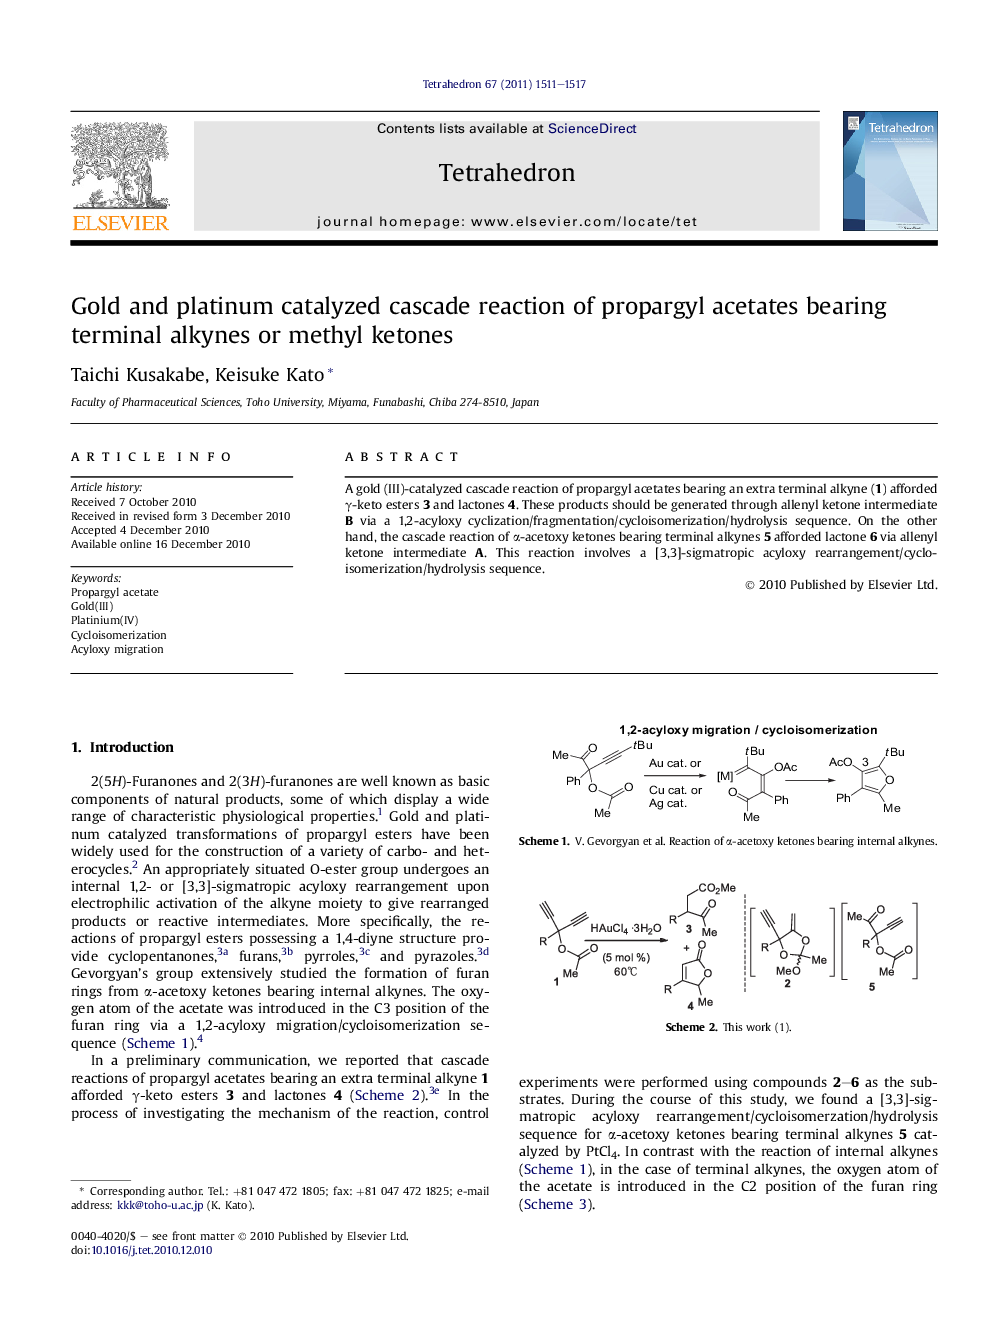 Gold and platinum catalyzed cascade reaction of propargyl acetates bearing terminal alkynes or methyl ketones